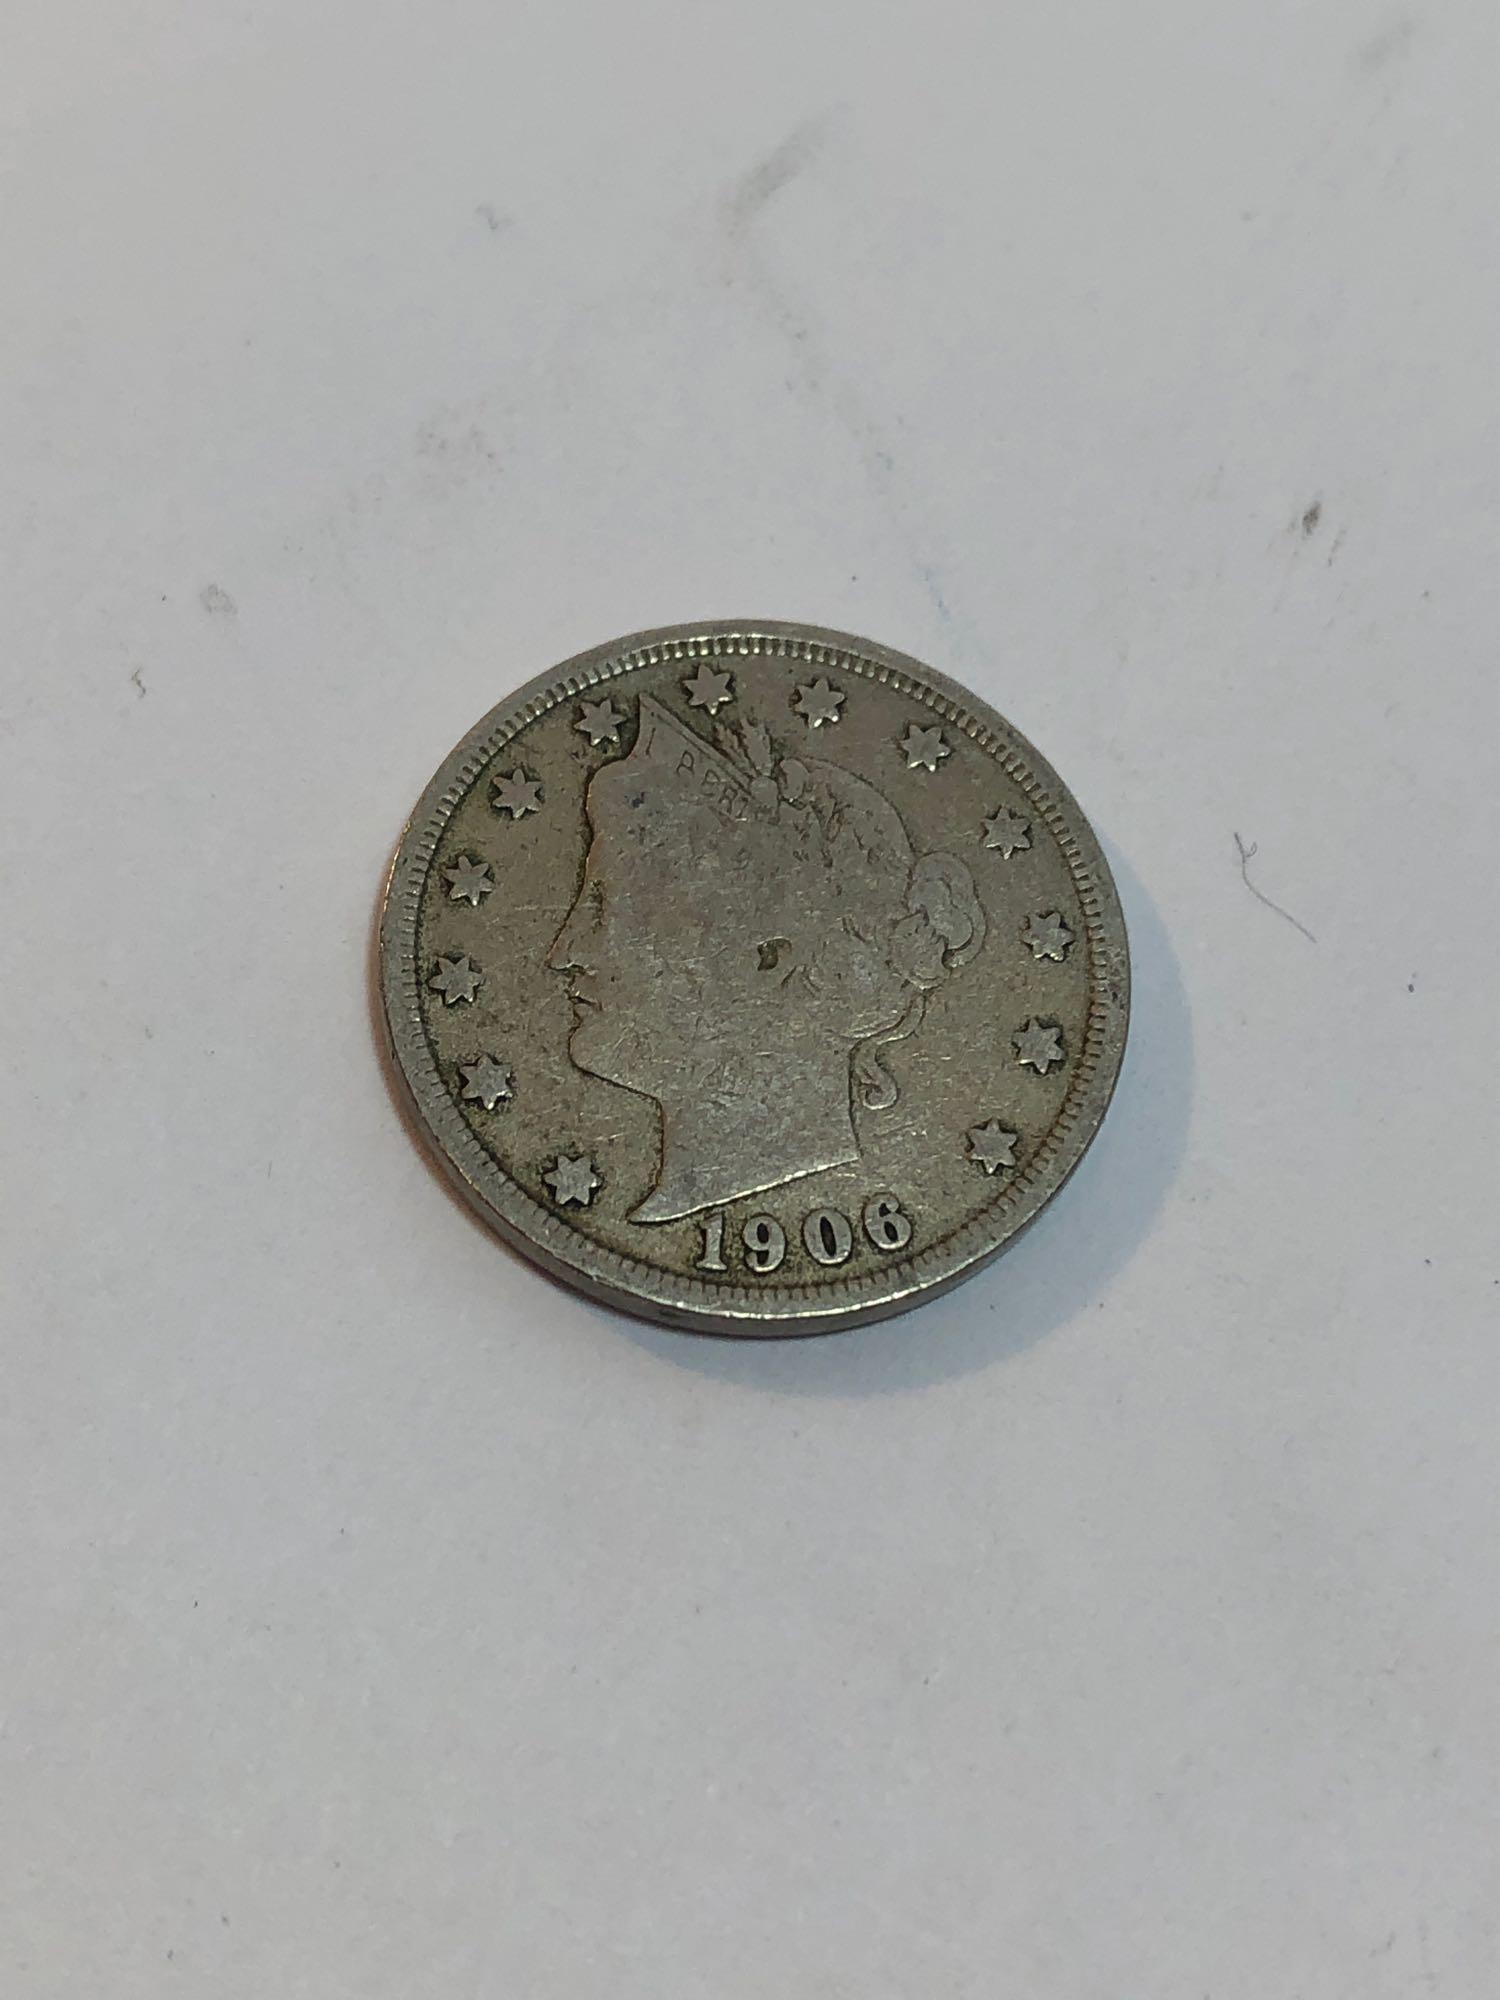 3 U.S. Coins, 1906 Nickel, 1941 Silver Half Dollar, 1993 1 oz Silver Dollar